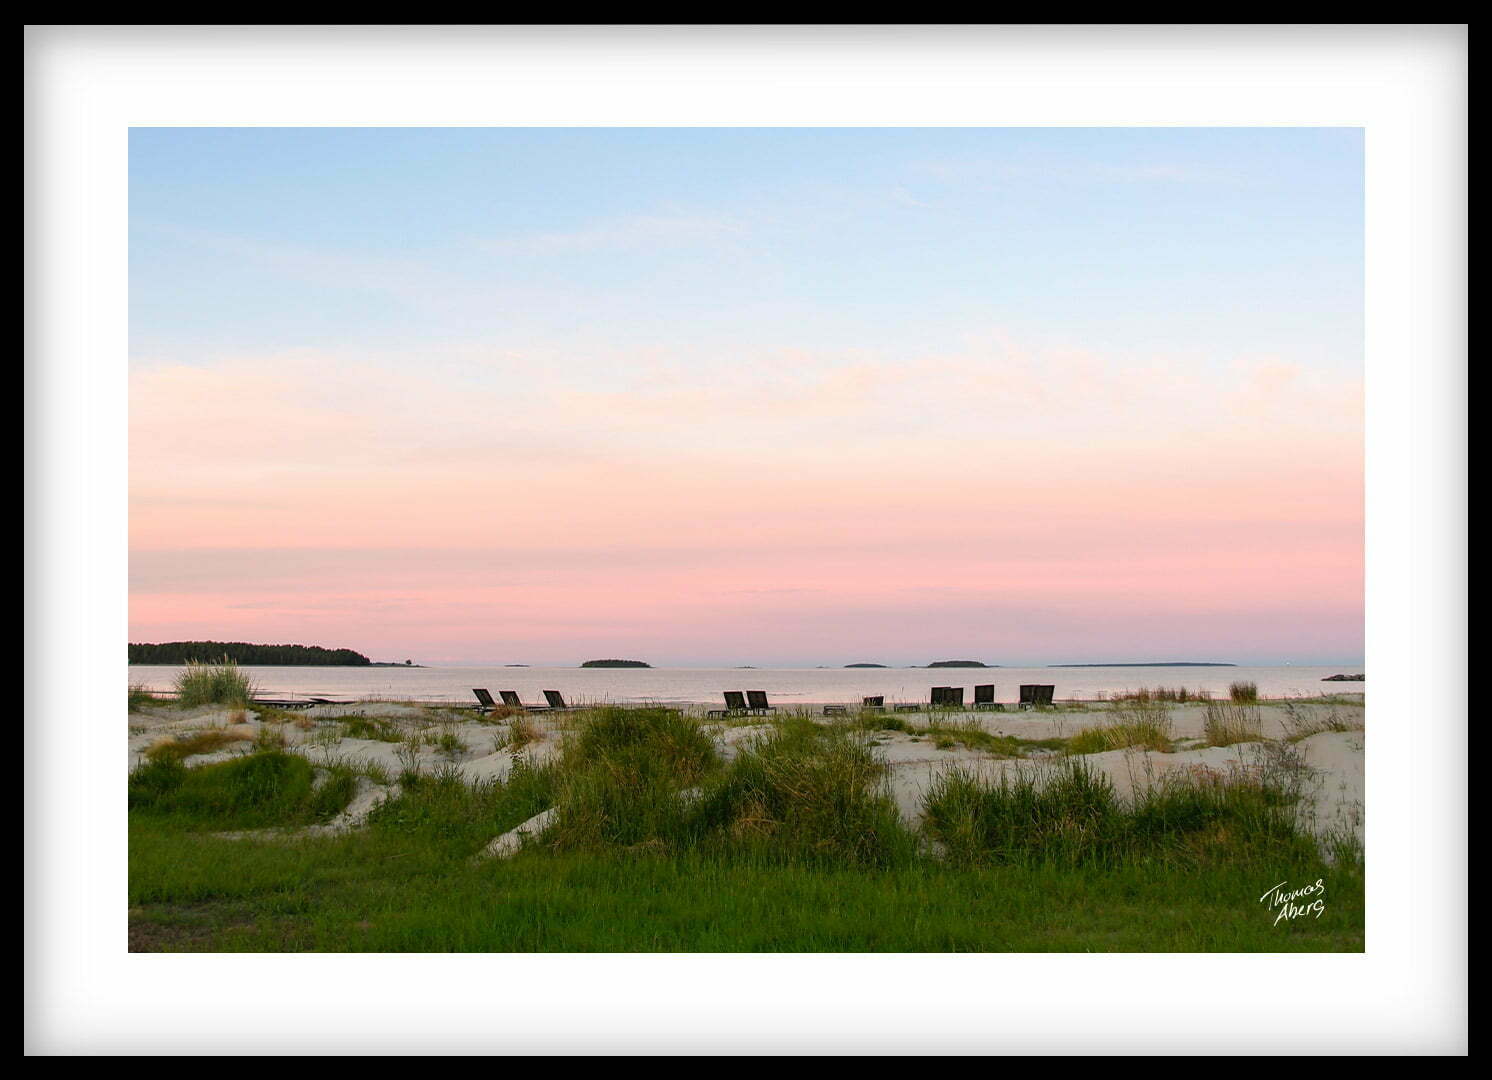 Liggade tavla 00143 Pite havsbad sommarnatt strand rosa himmel